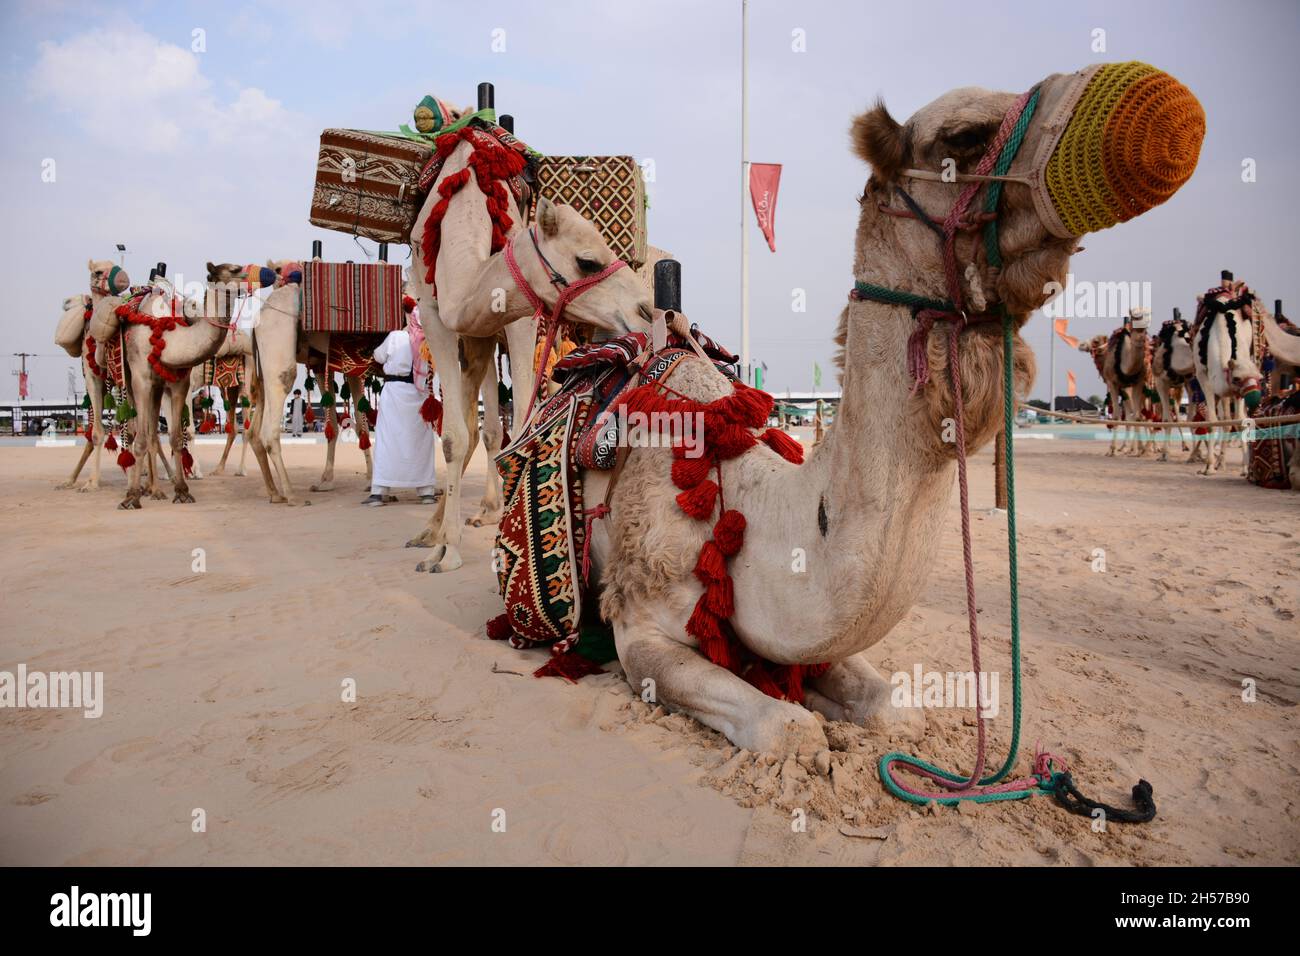 A camel caravan in the Empty Quarter desert of the Arabian Peninsula Stock Photo